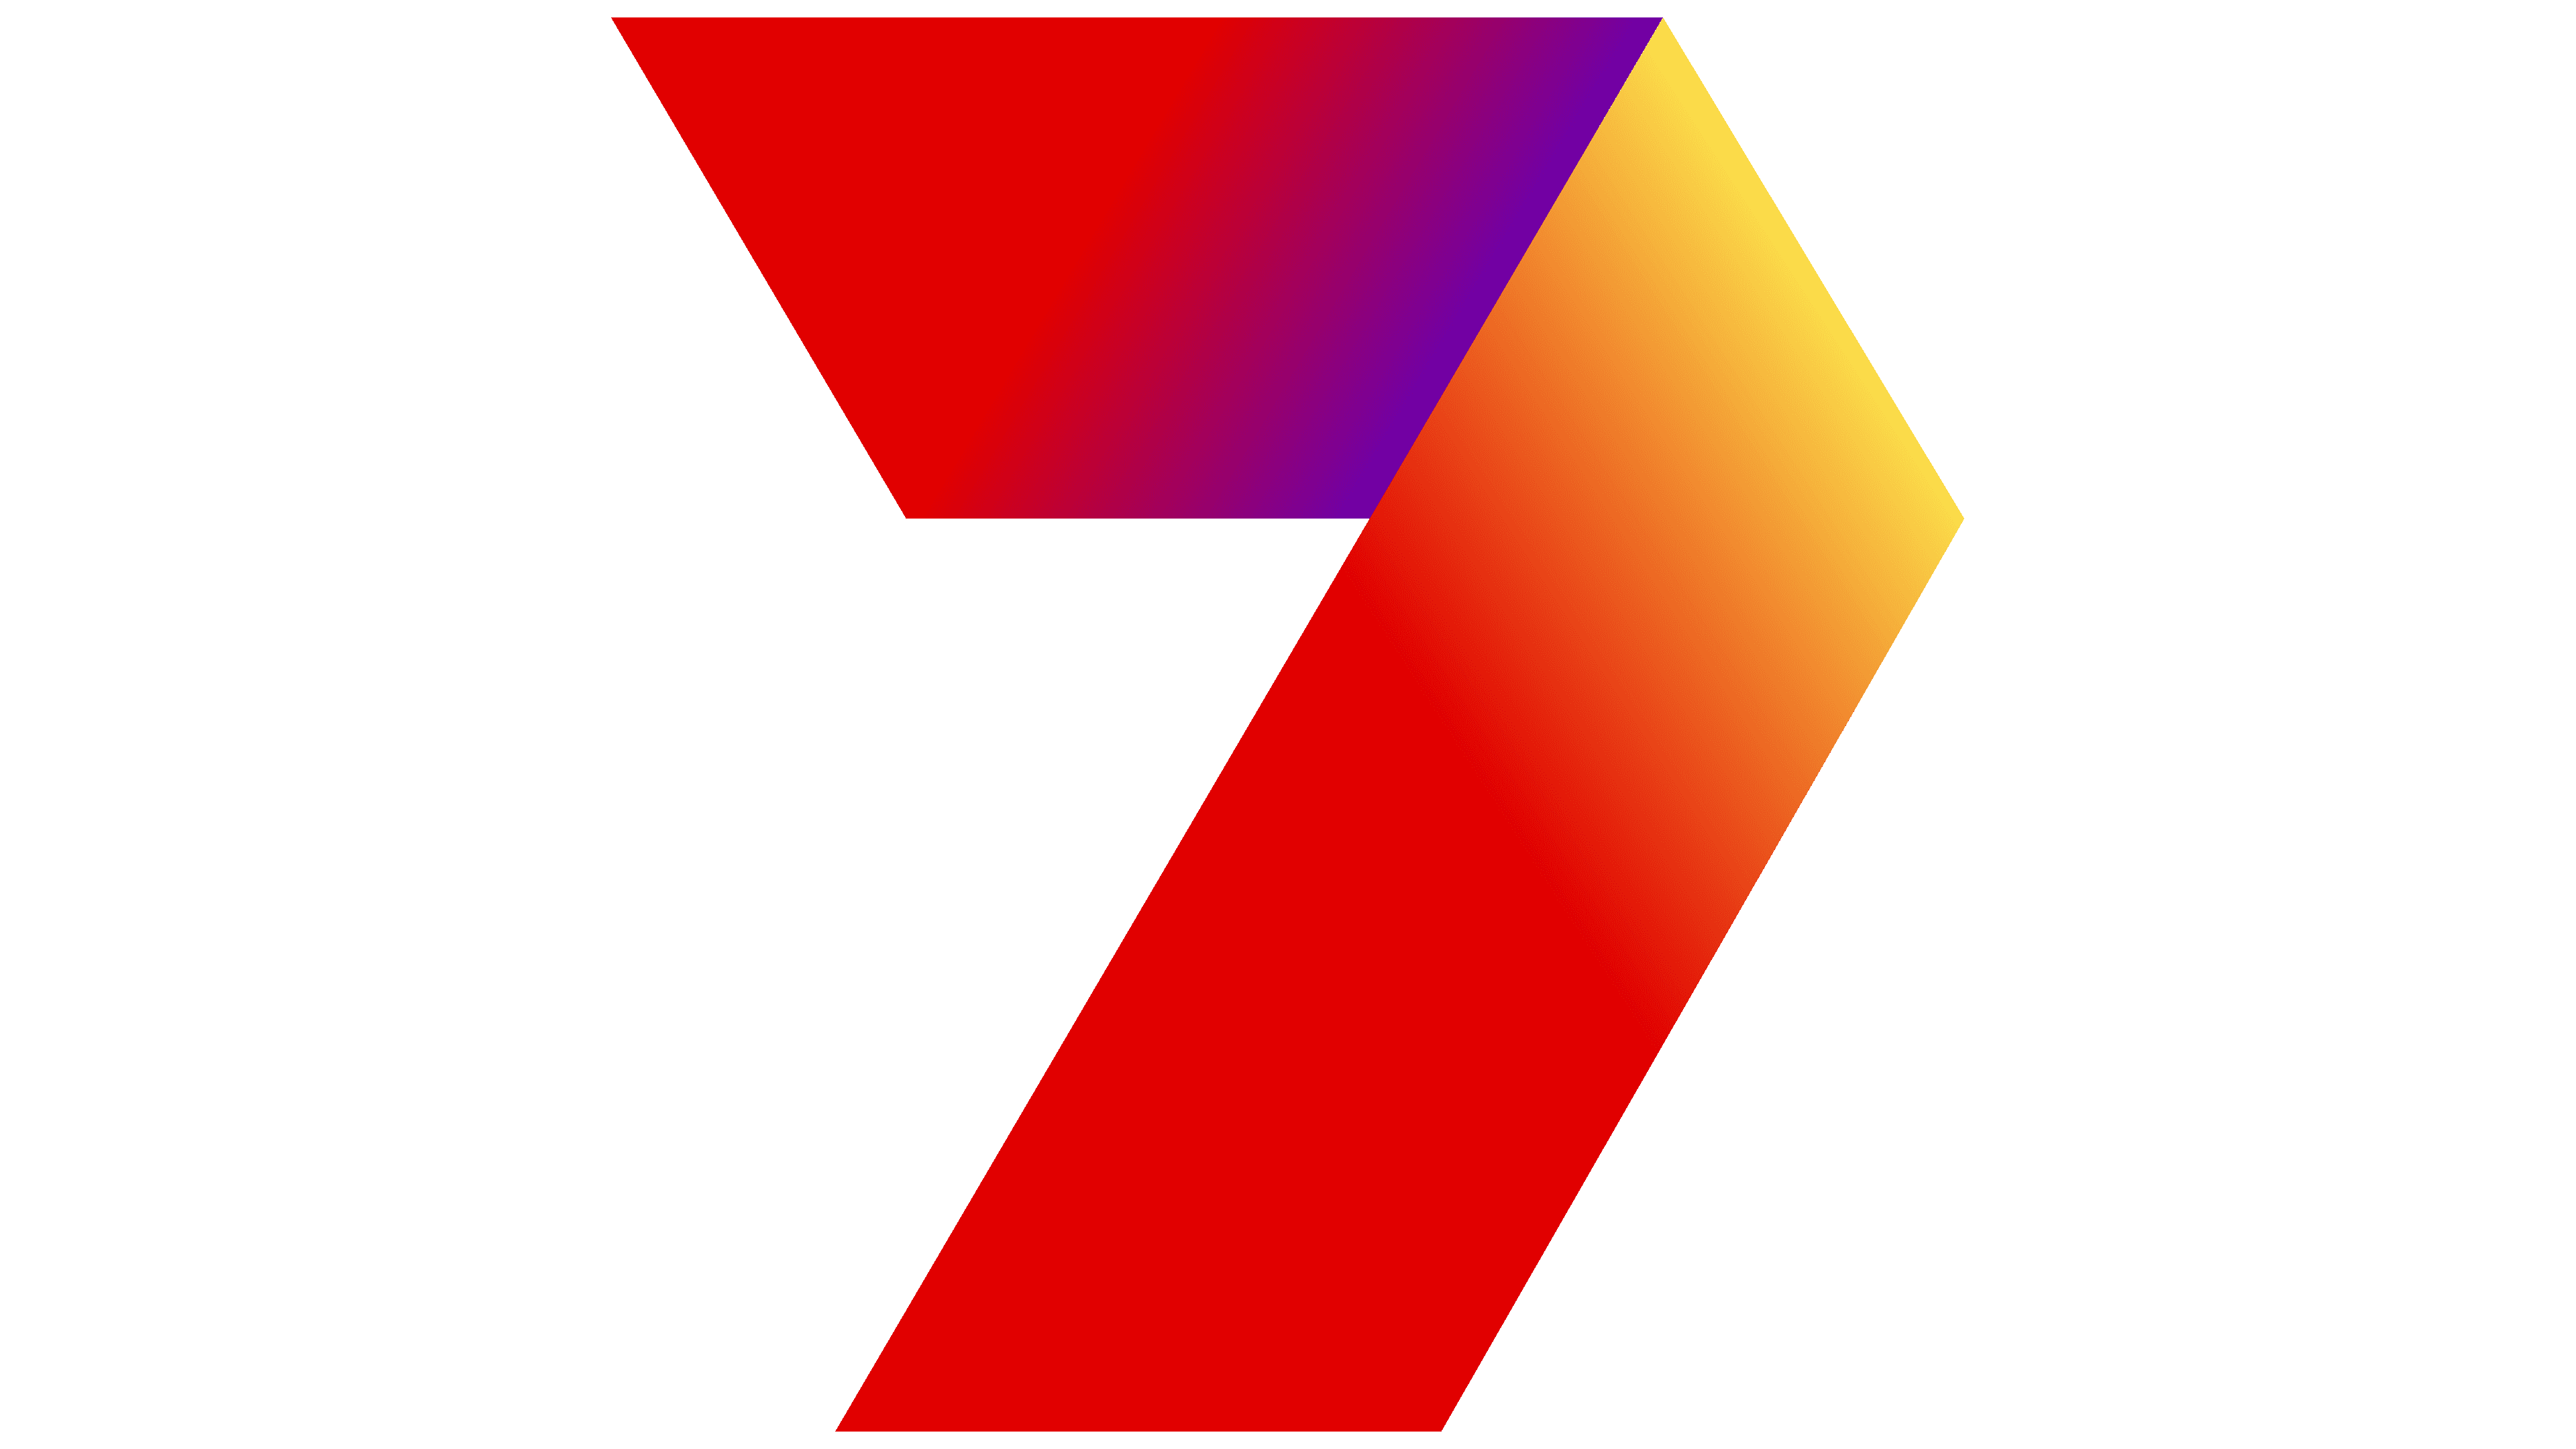 Channel 7 Australia